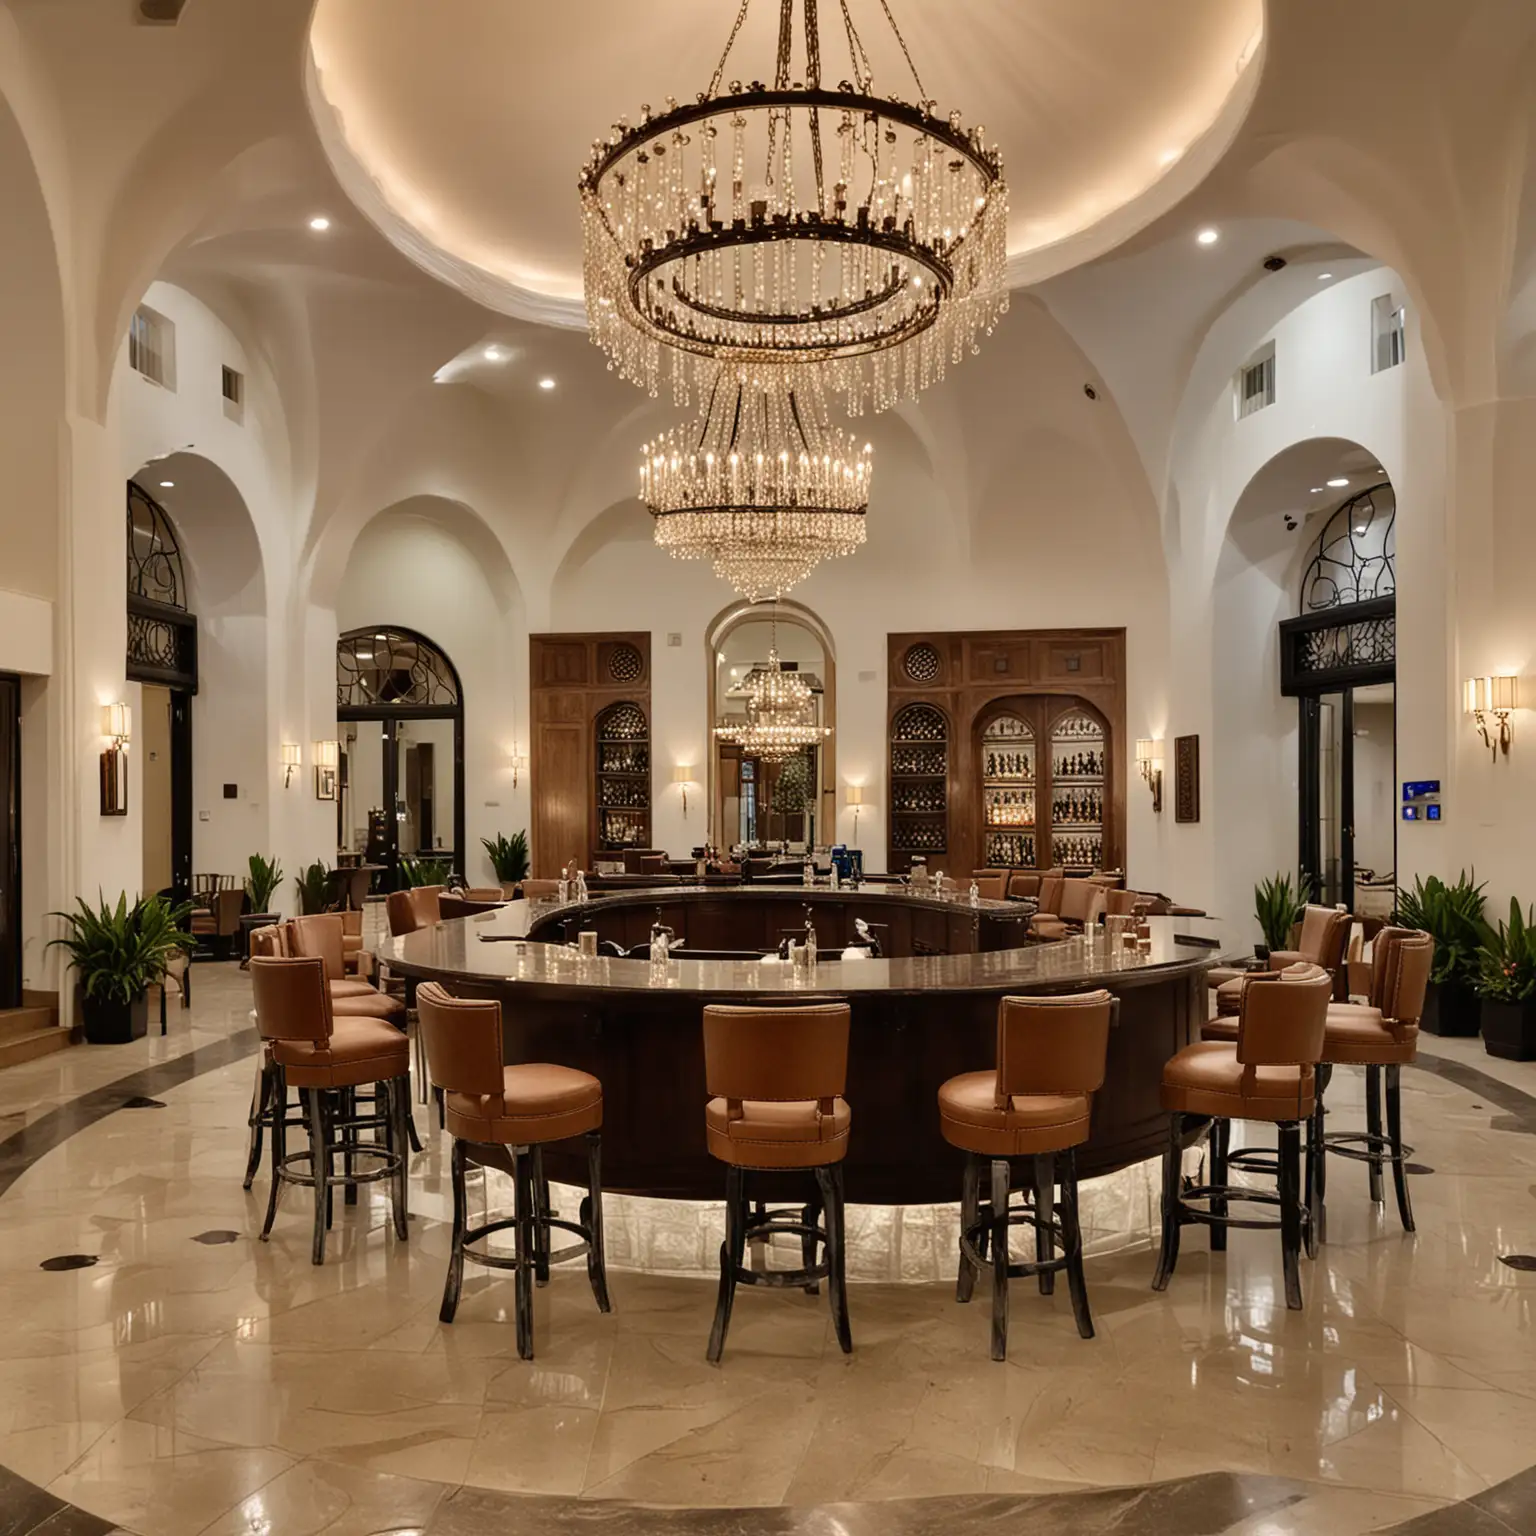 Elegant Spanish Colonial Circular Bar with Chandelier in Hotel Lobby